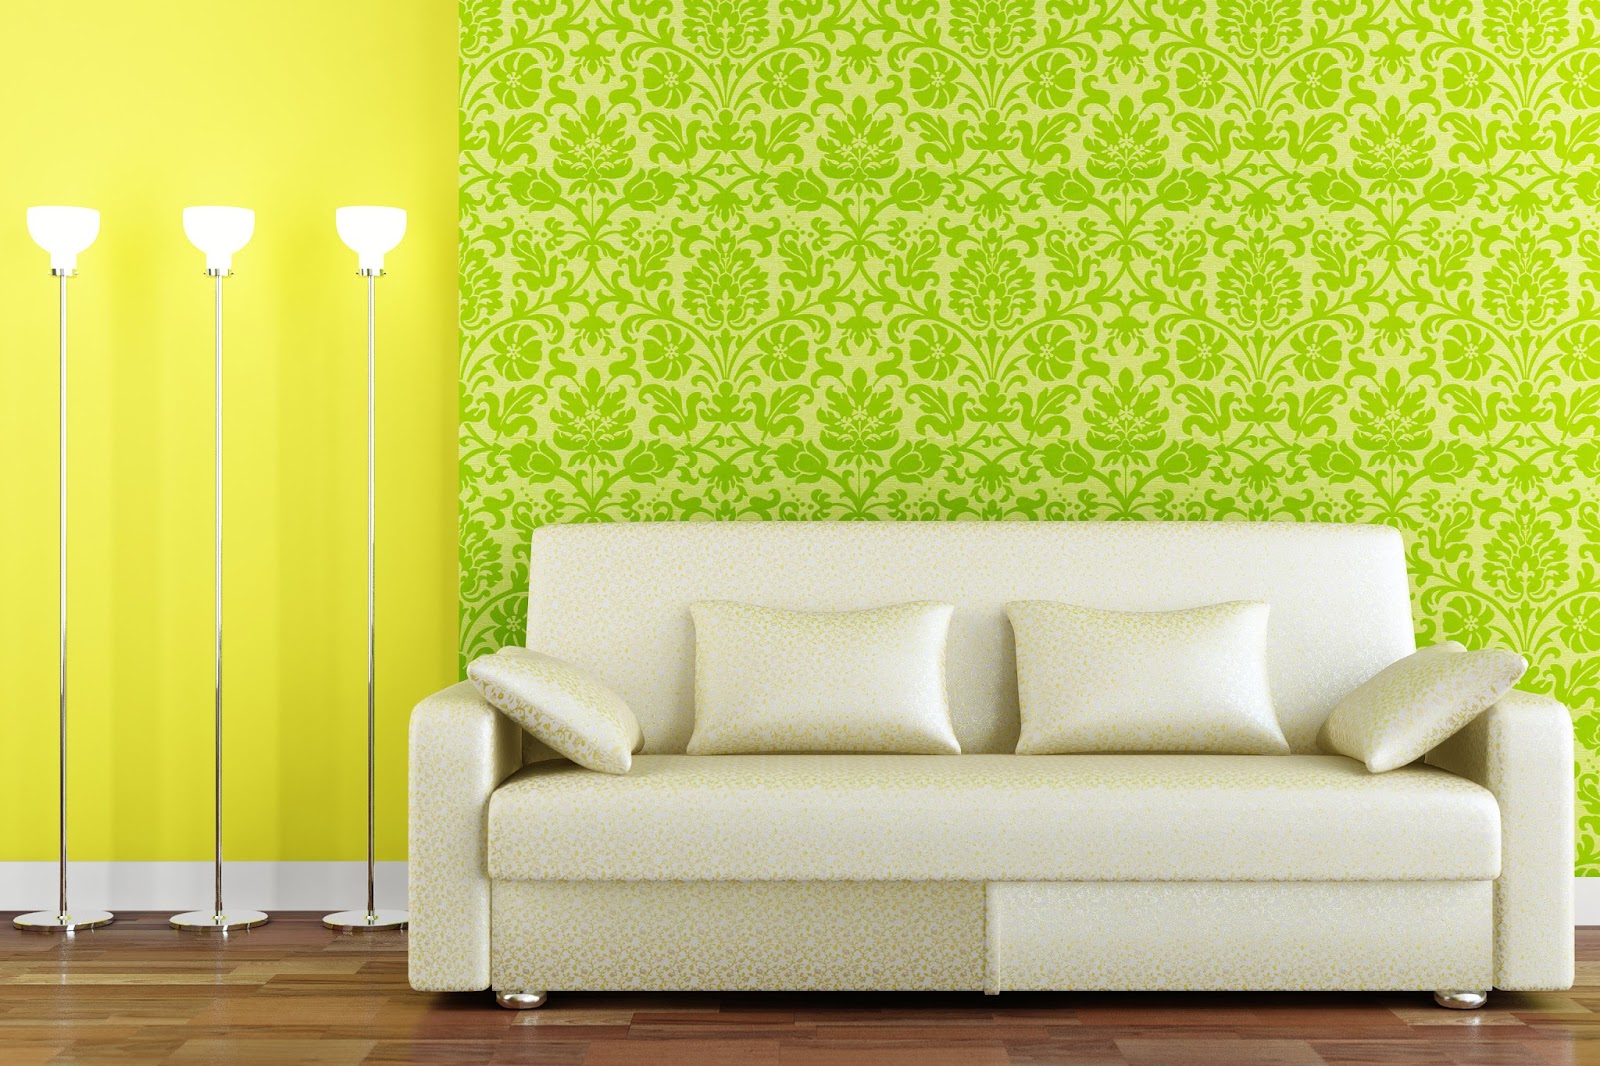 wallpaper warna kuning,green,wall,yellow,wallpaper,room